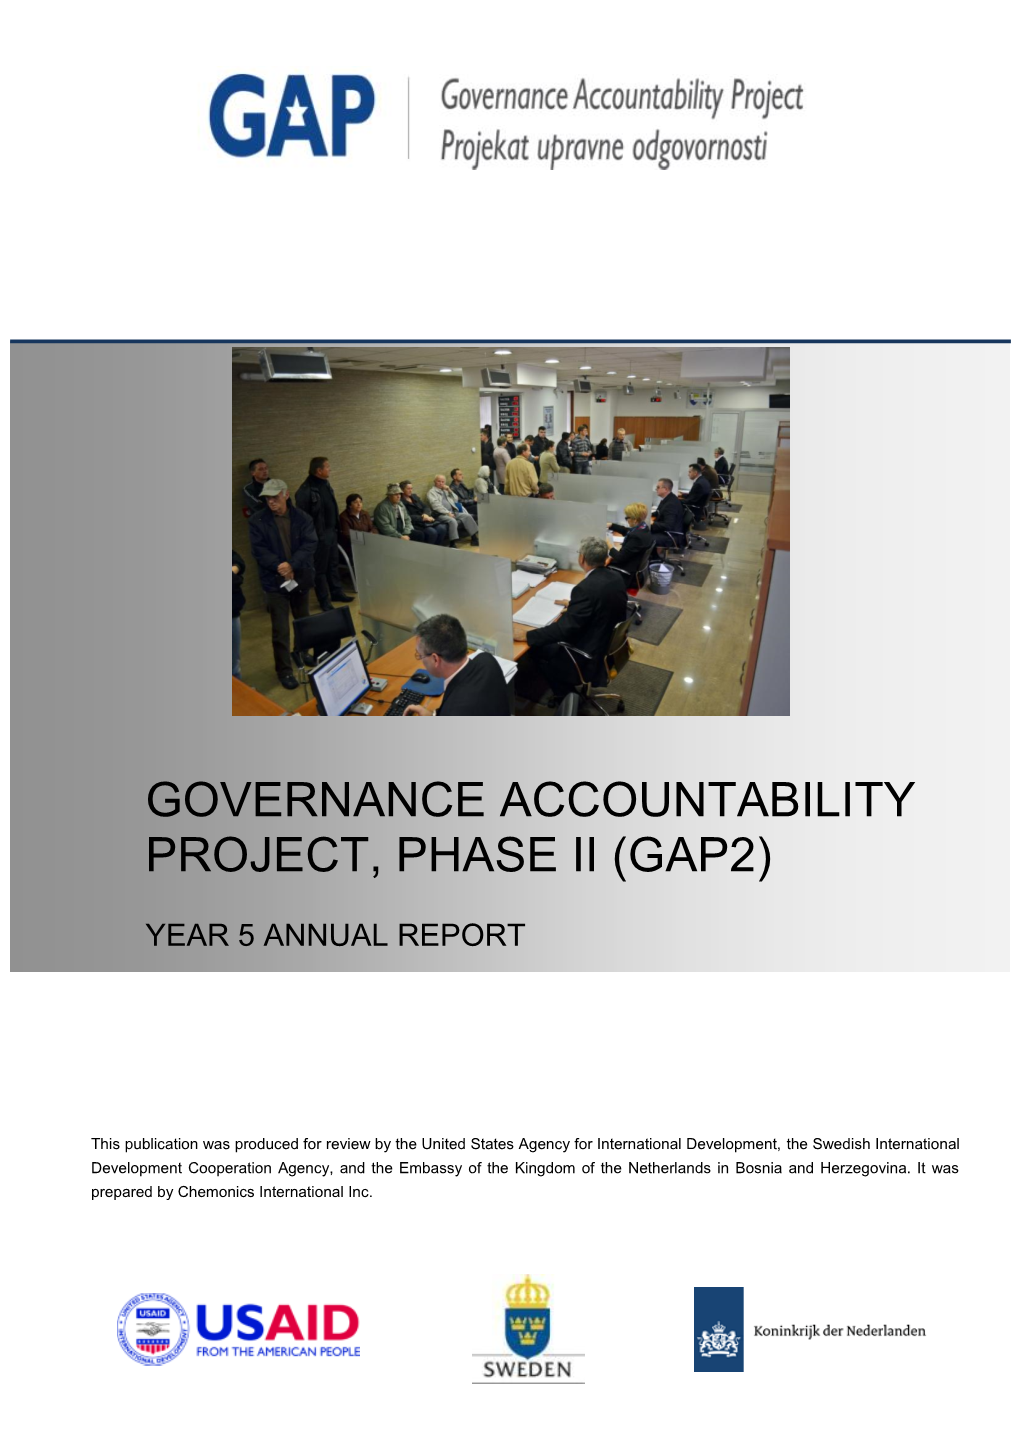 Governance Accountability Project, Phase Ii (Gap2)